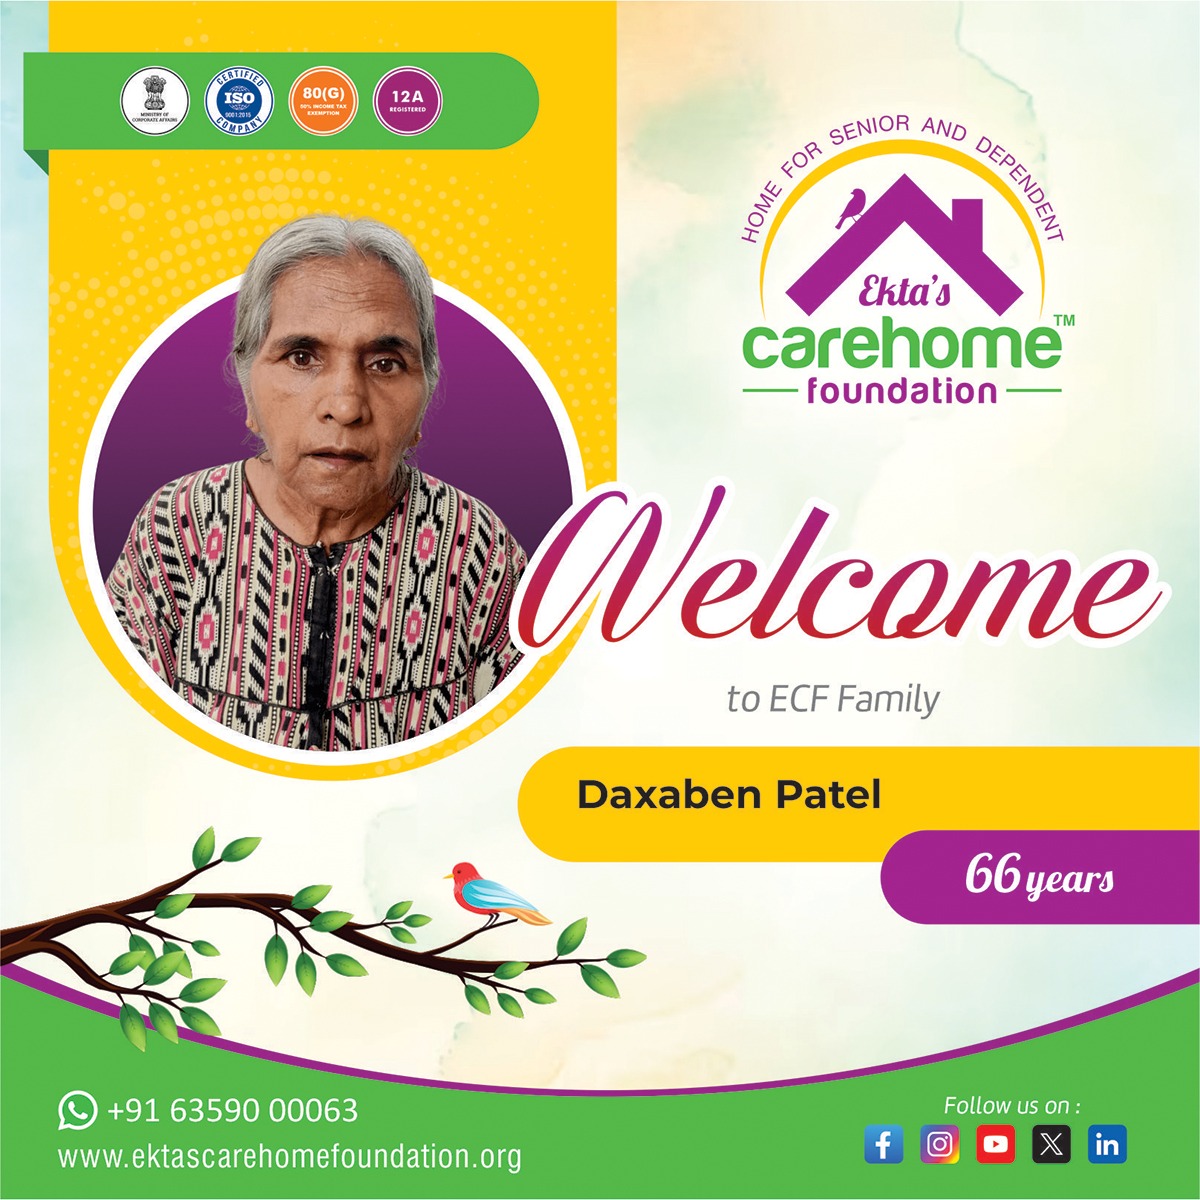 ECF warmly welcomes Daxaben Patel

#ektascarehomefoundation #gratfulthankfulblessed #assistedlivingfacility #carehome #pallativecare  #welcome #pallativecare #elderhome #eldercare #seniourlivingcommunity #PersonalDevelopment #seniorcircle  #PatientCare #Vadodara #Gujarat